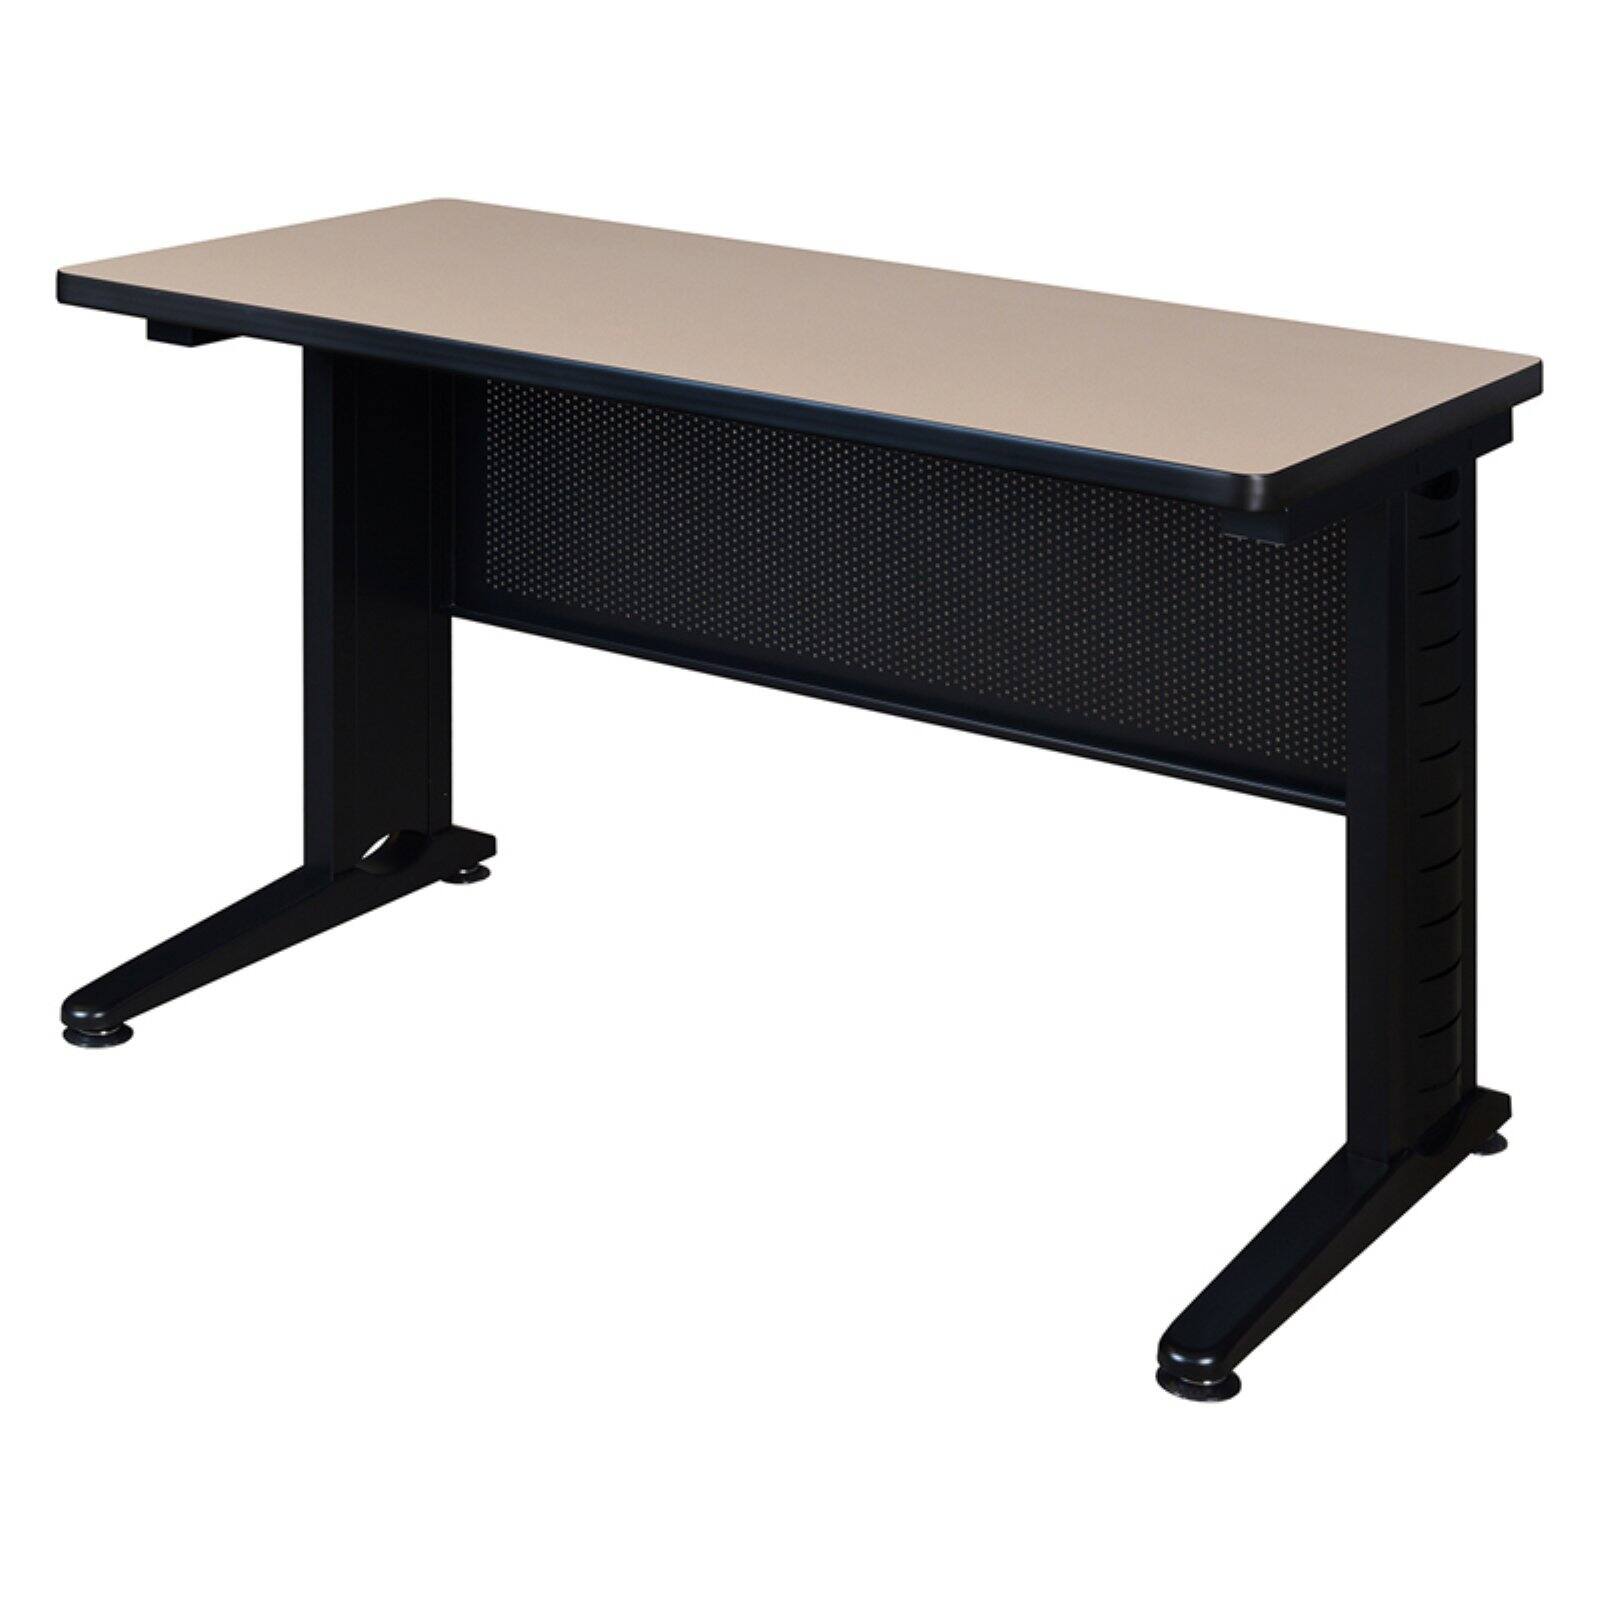 Regency Seating 84" x 24" Training Table, Melamine Laminate Table Top - image 1 of 2